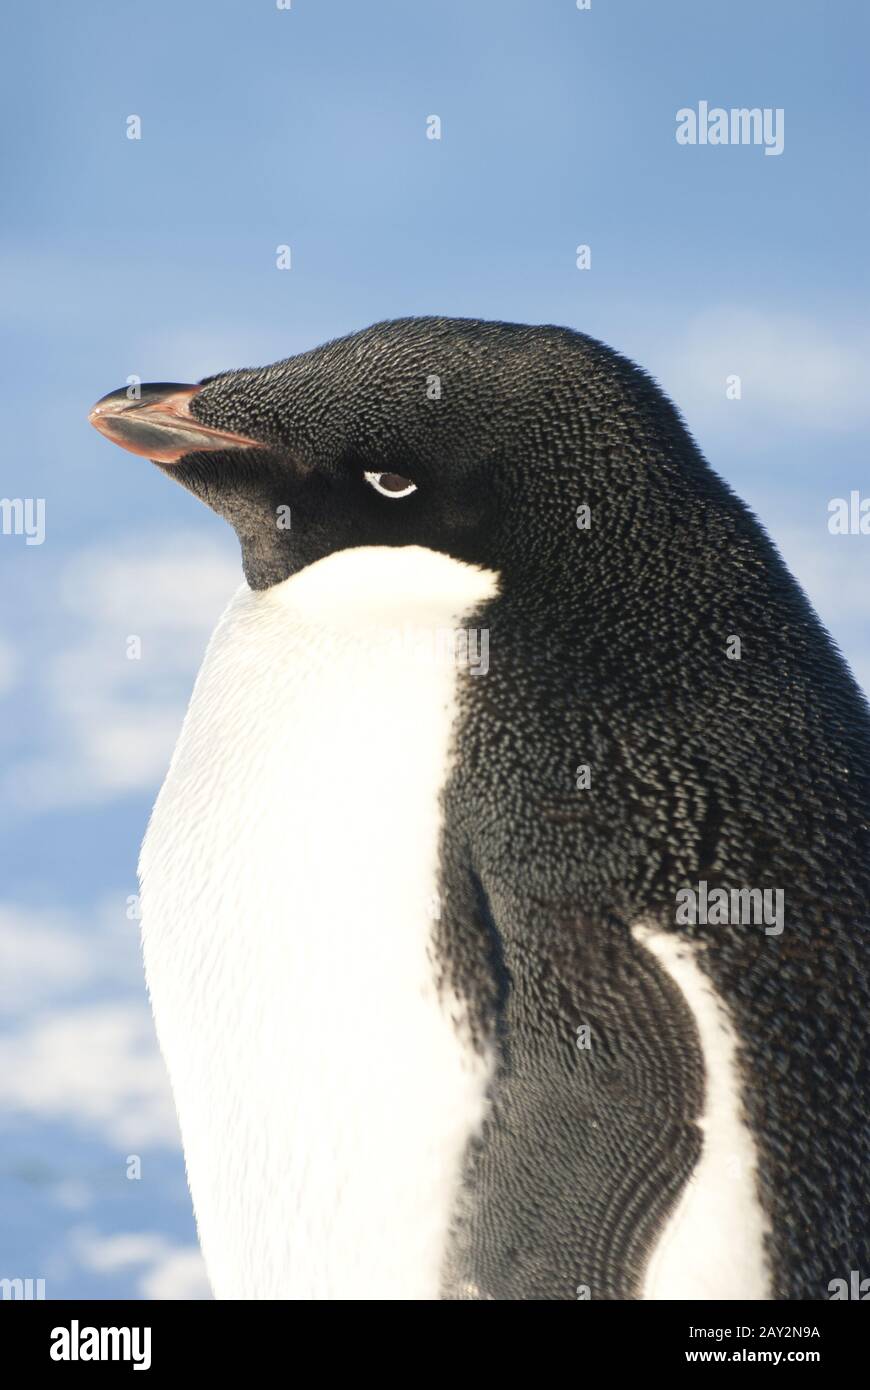 Portrait of an adult Adelie penguin against a blue sky. Stock Photo